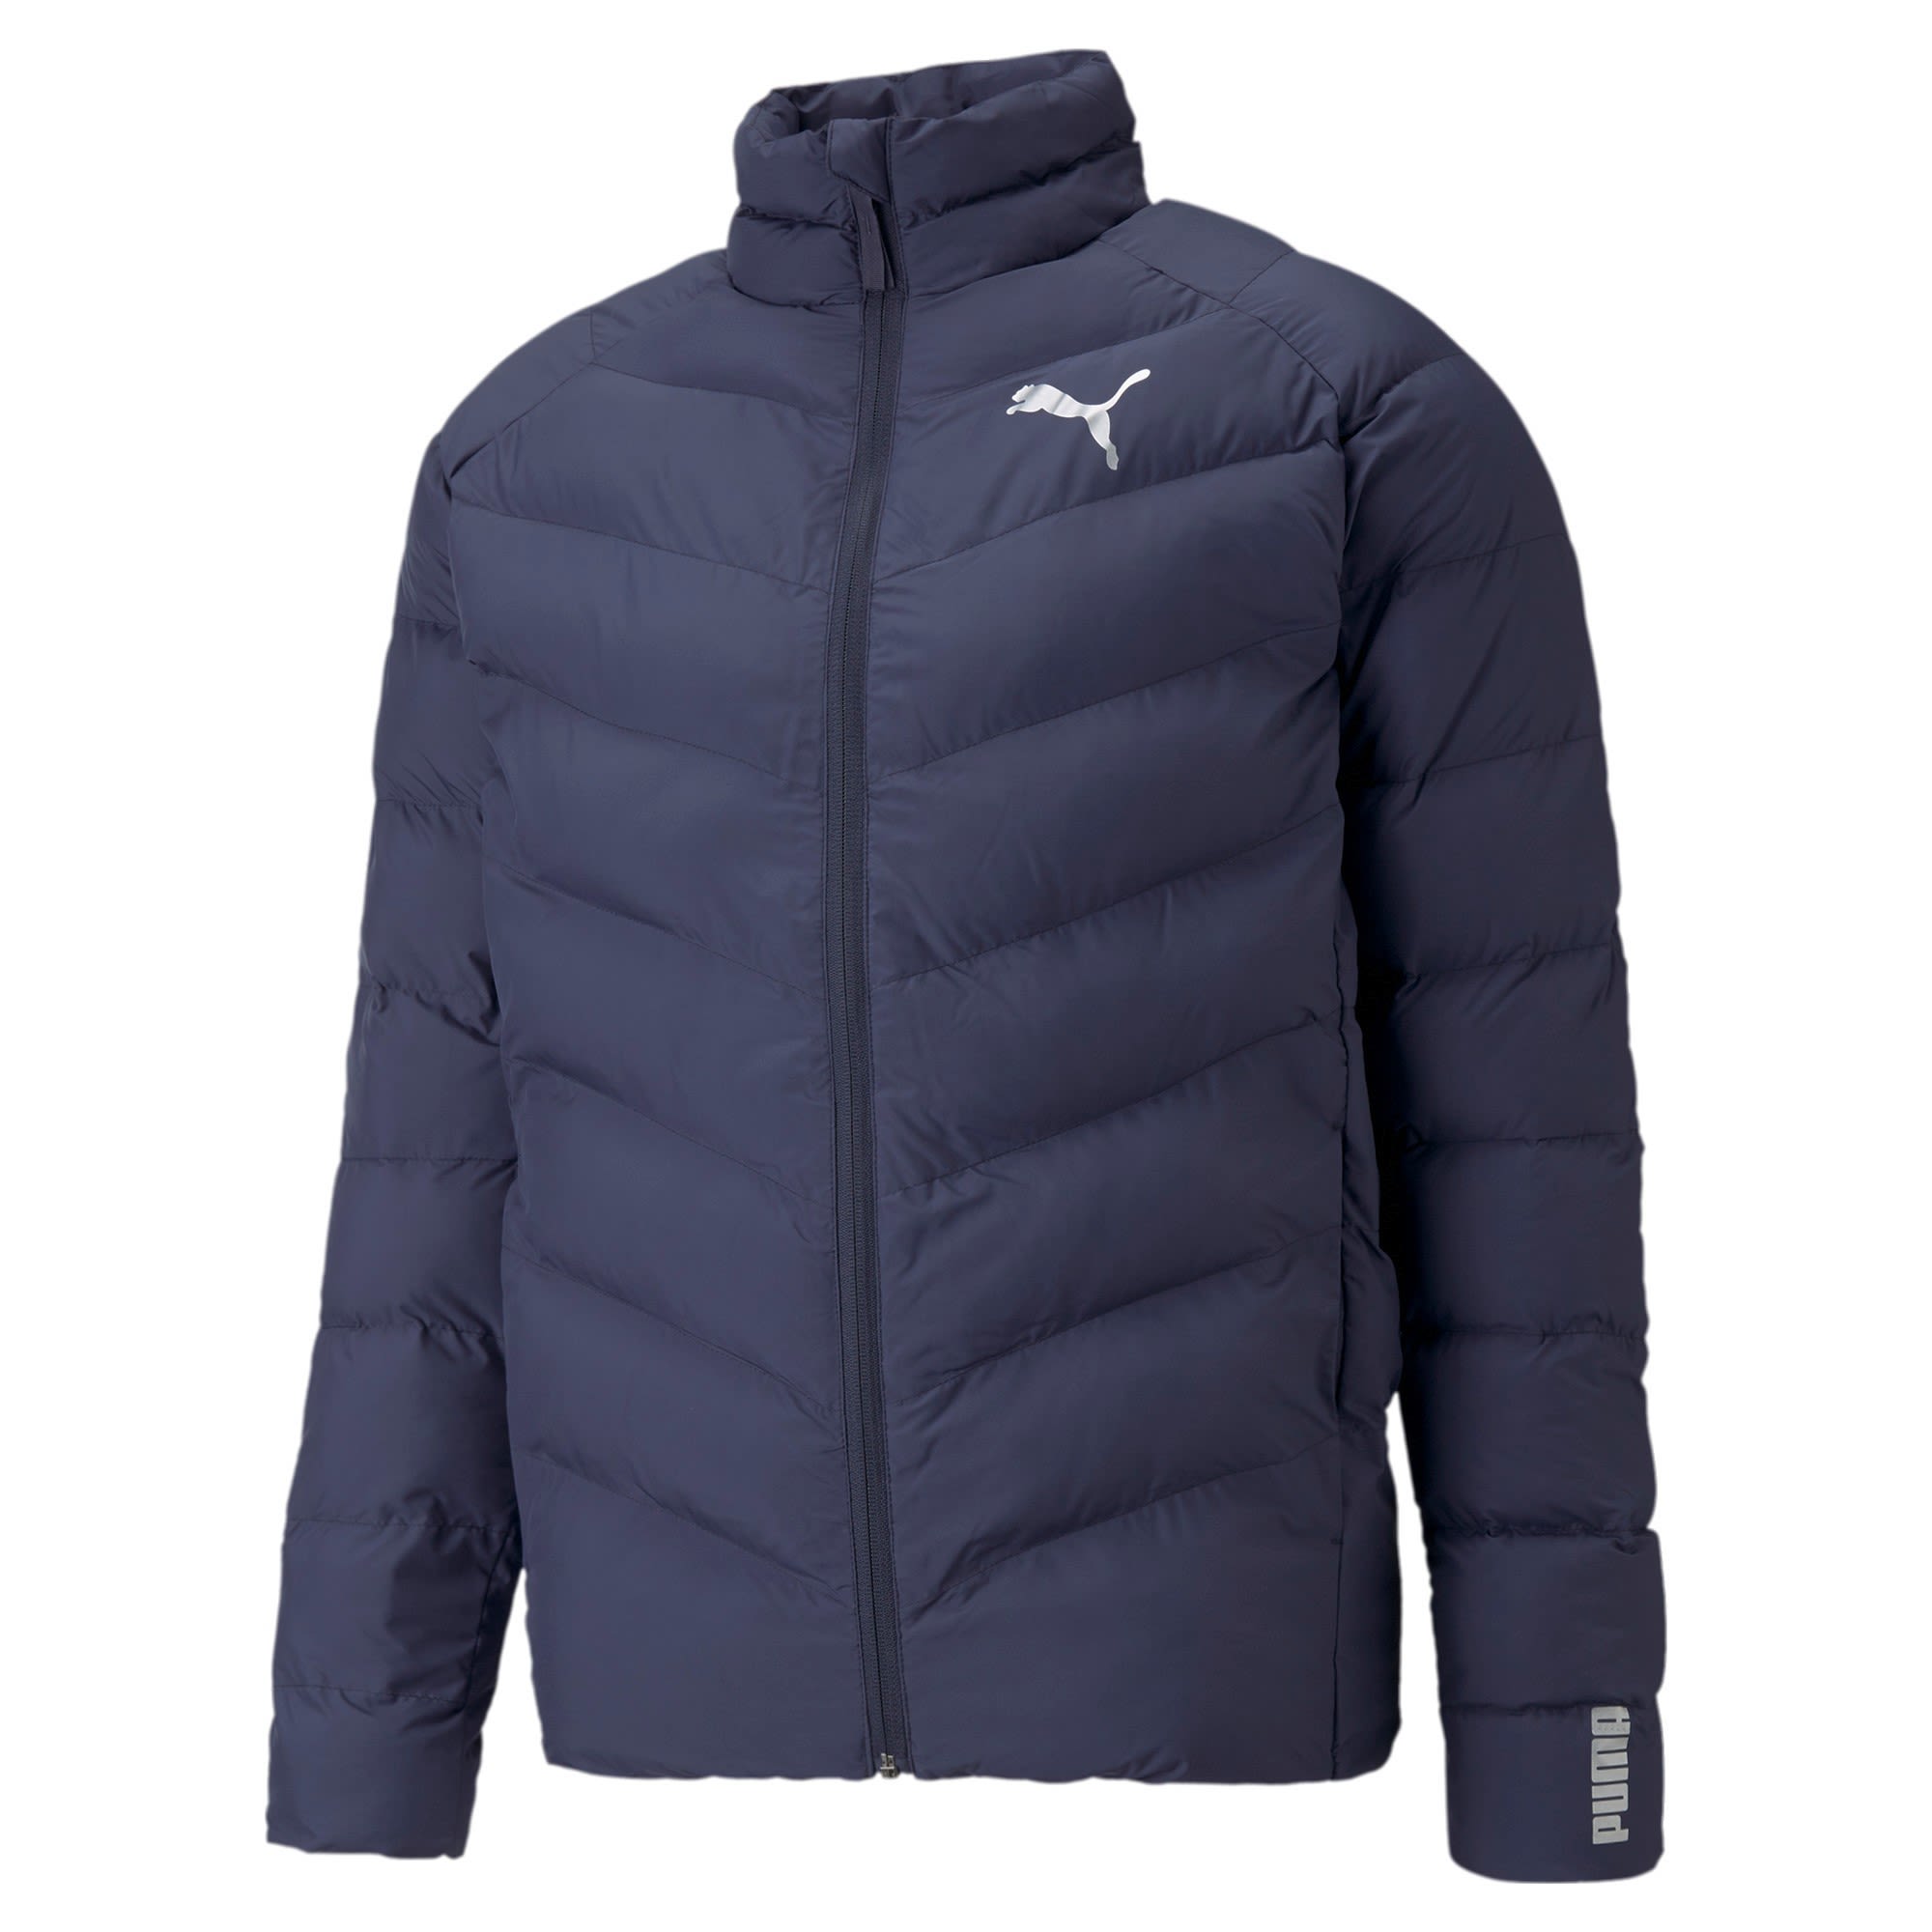 Puma Warmcell Lightweight Jacket Blau- Male Anoraks- Grsse M - Farbe Peacoat